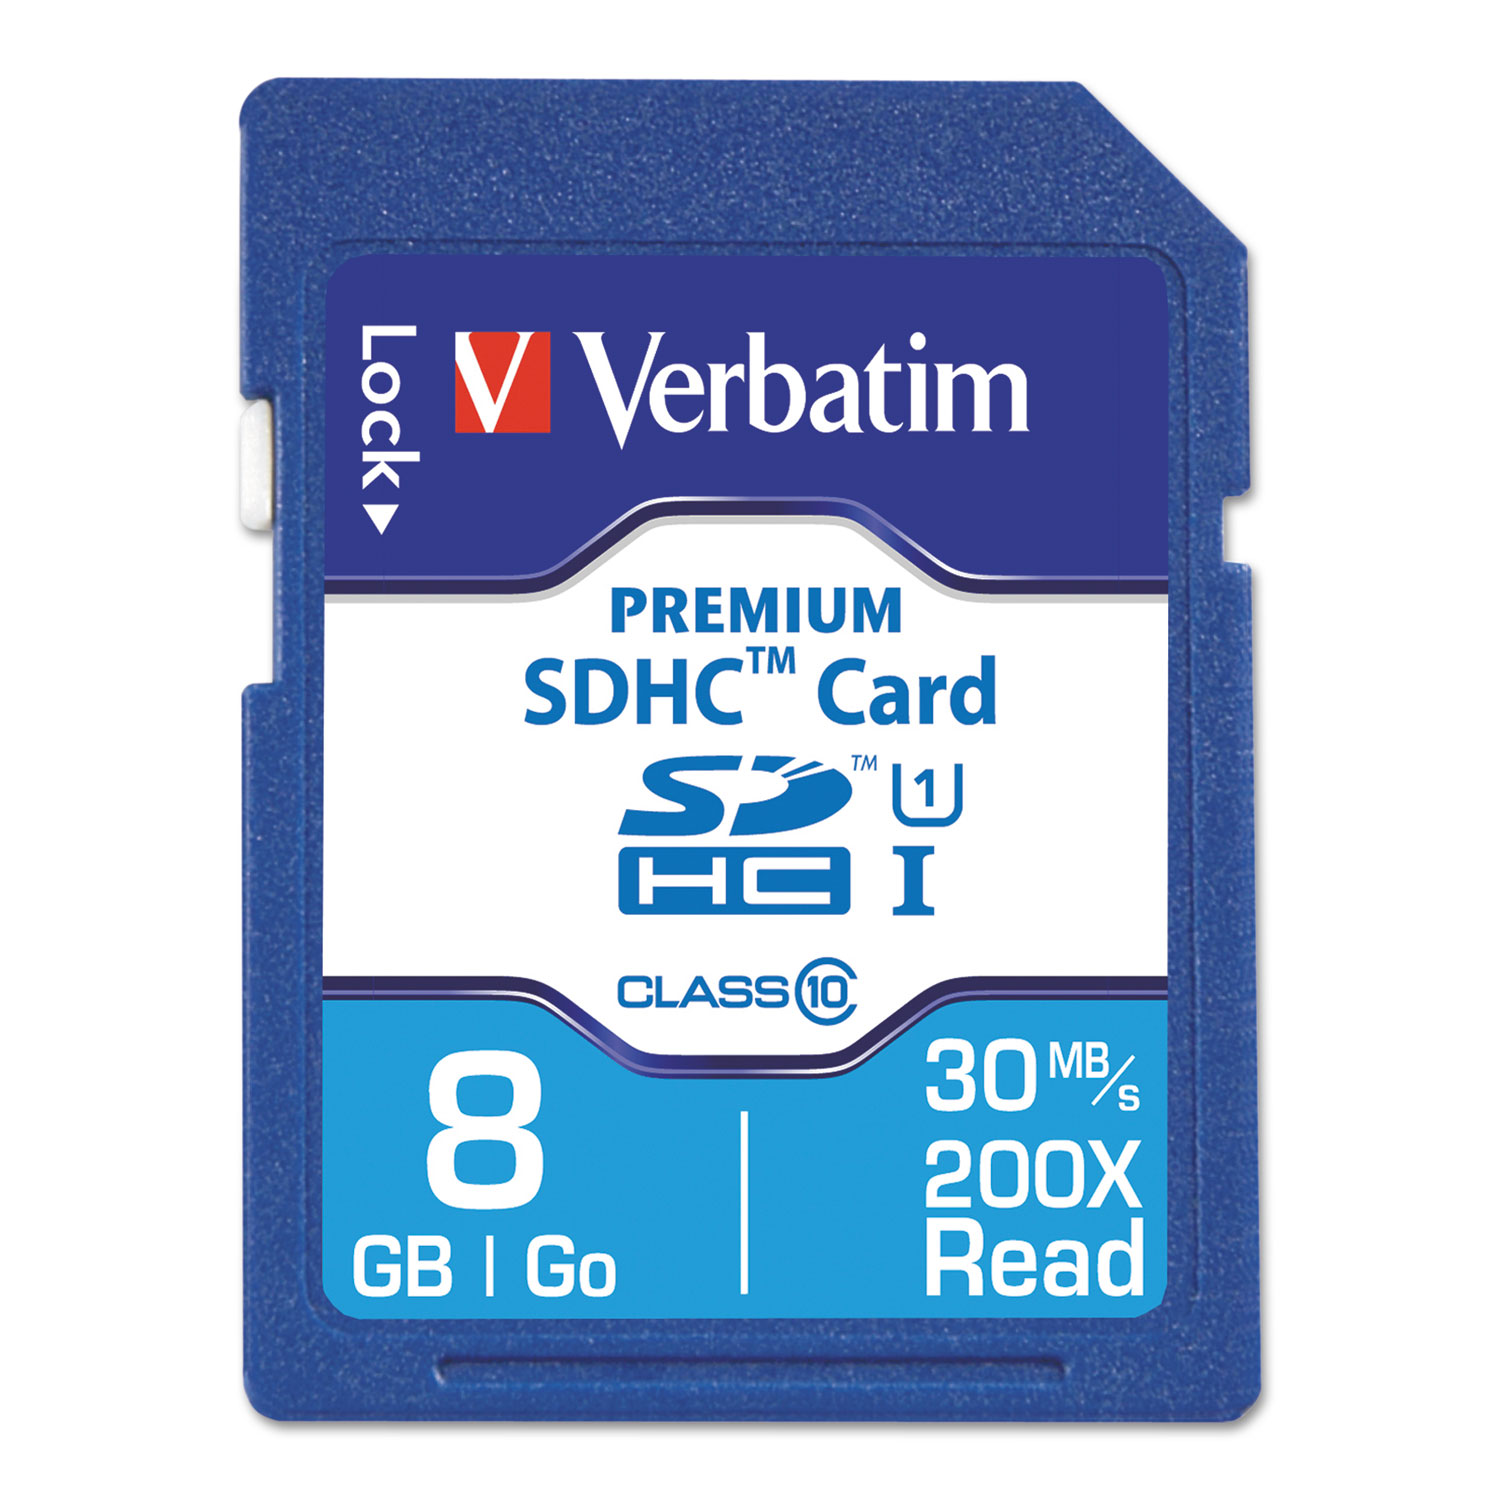 Premium SDHC Memory Card, Class 10, 8GB